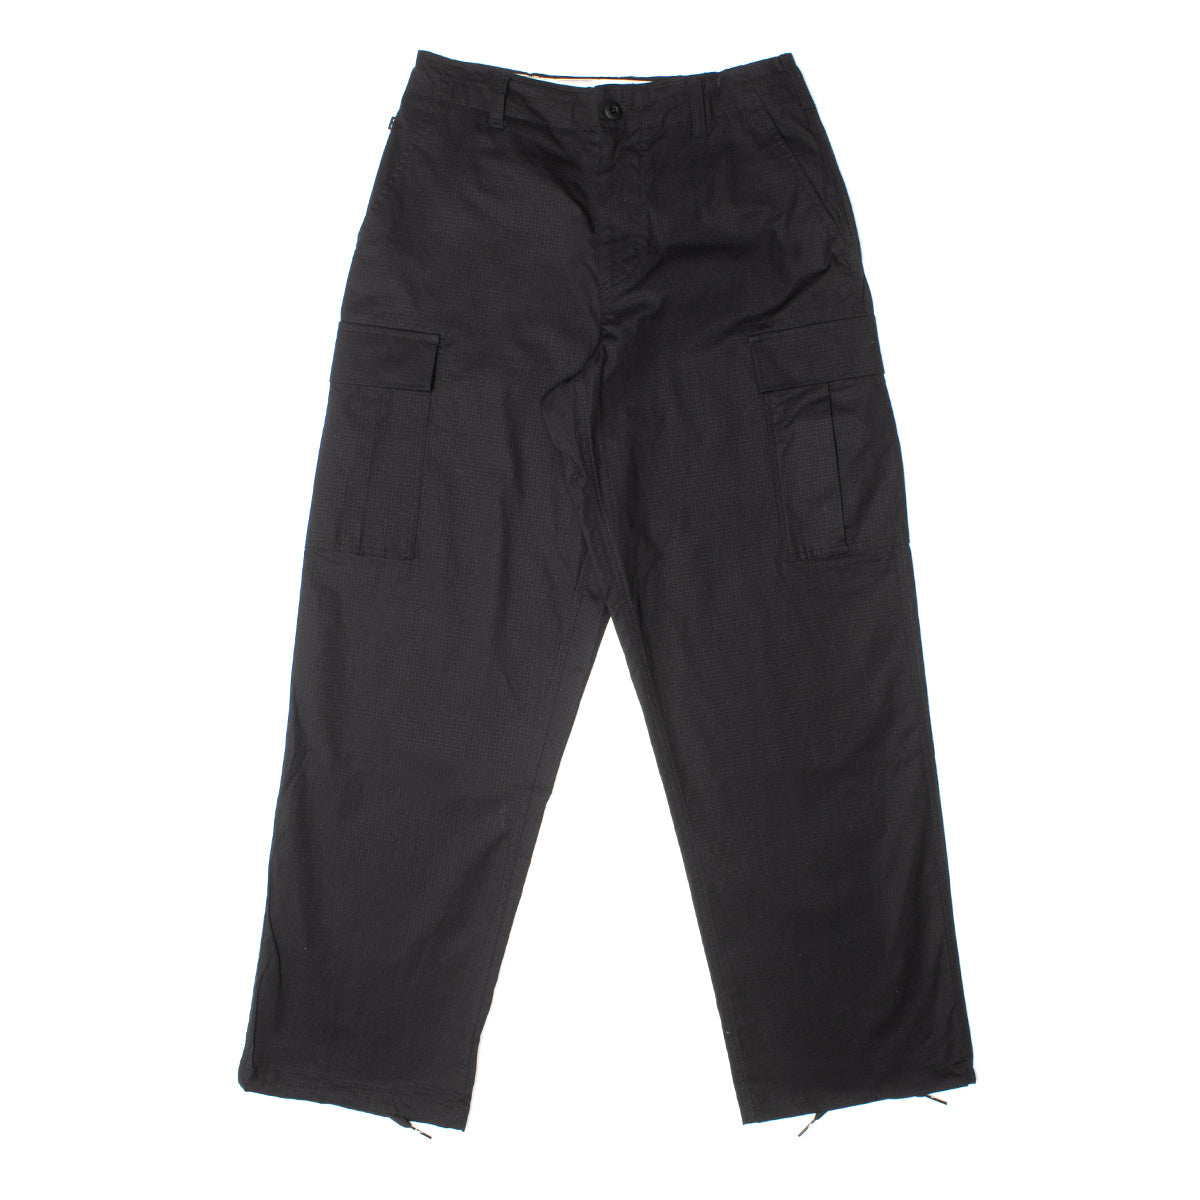 Nike SB | Kearny Cargo Pant Style # FQ0495-010 Color : Black 